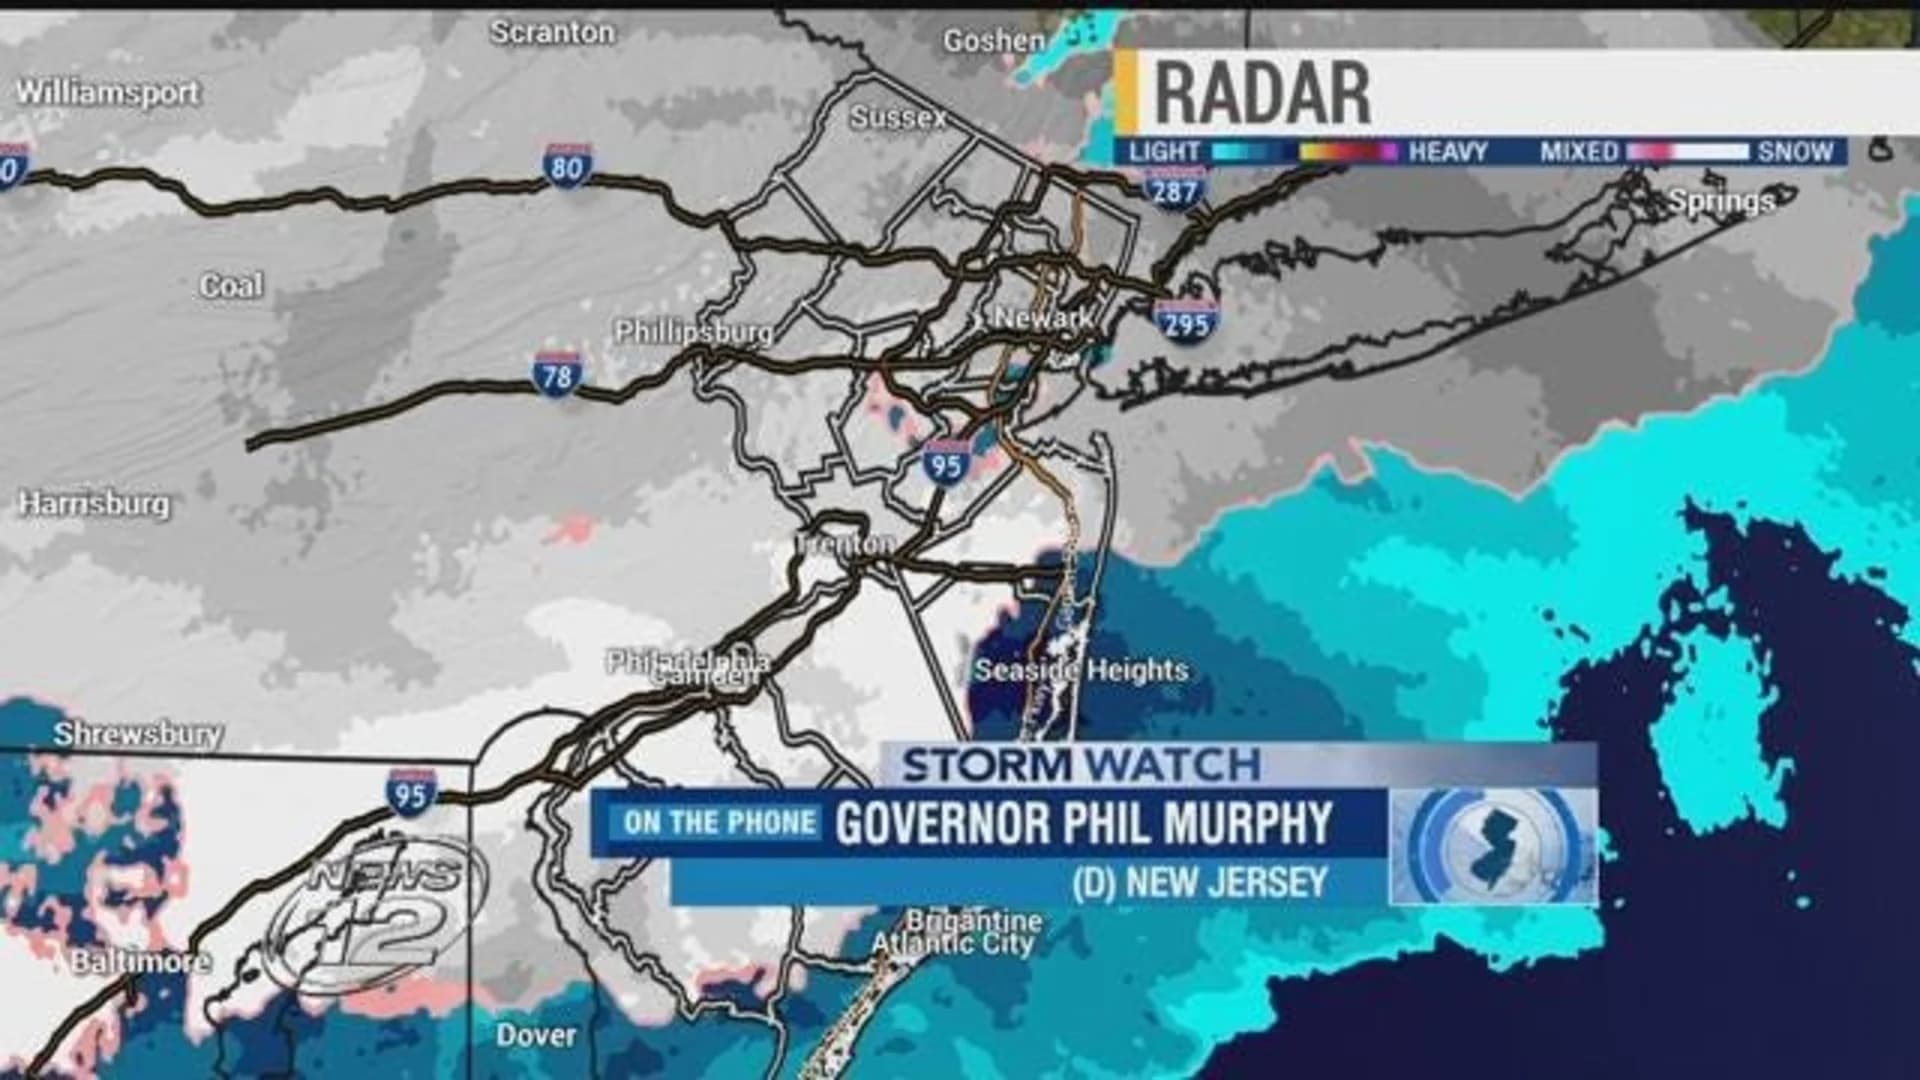 News 12 speaks to Gov. Phil Murphy about snow prep